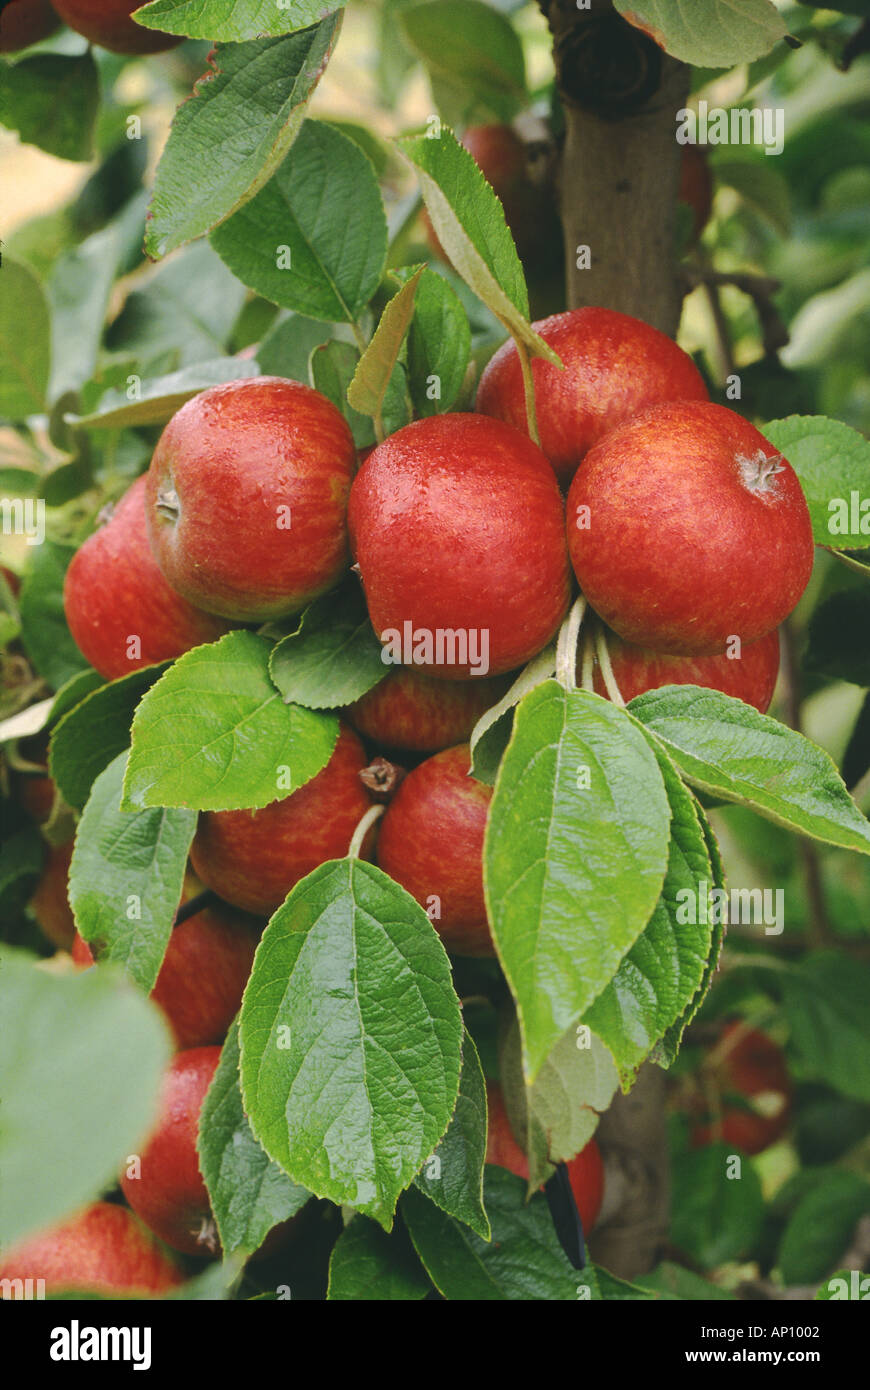 Apples variety Tropical Beauty on tree Stock Photo